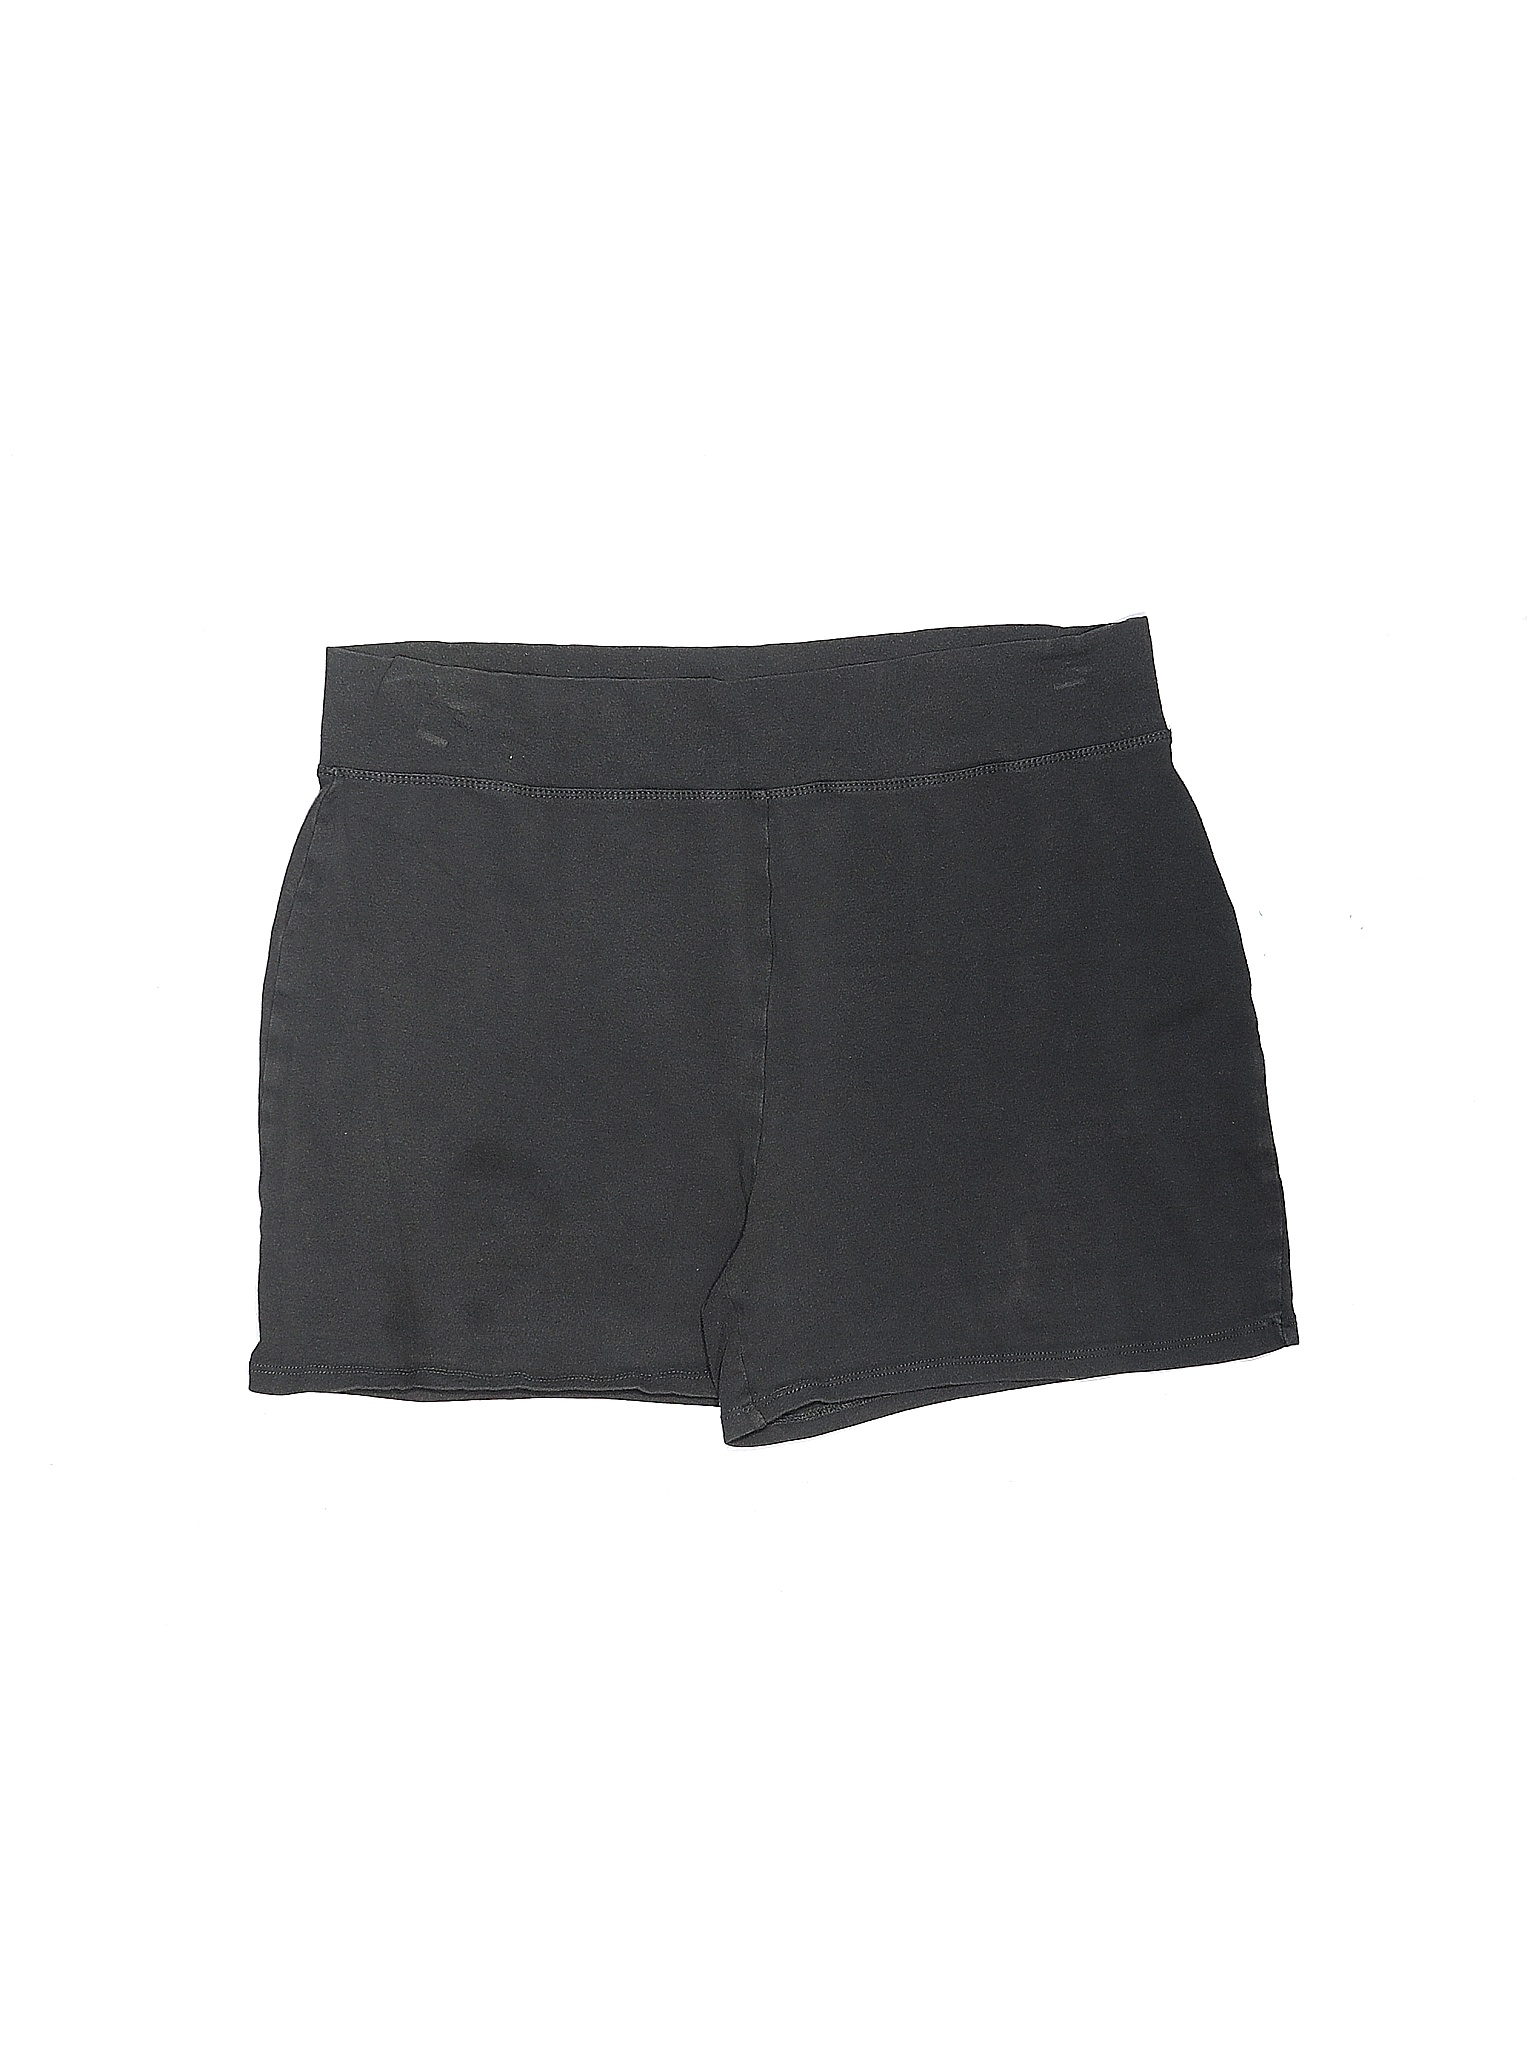 Zenana Premium Solid Black Gray Shorts Size XL - 33% off | thredUP